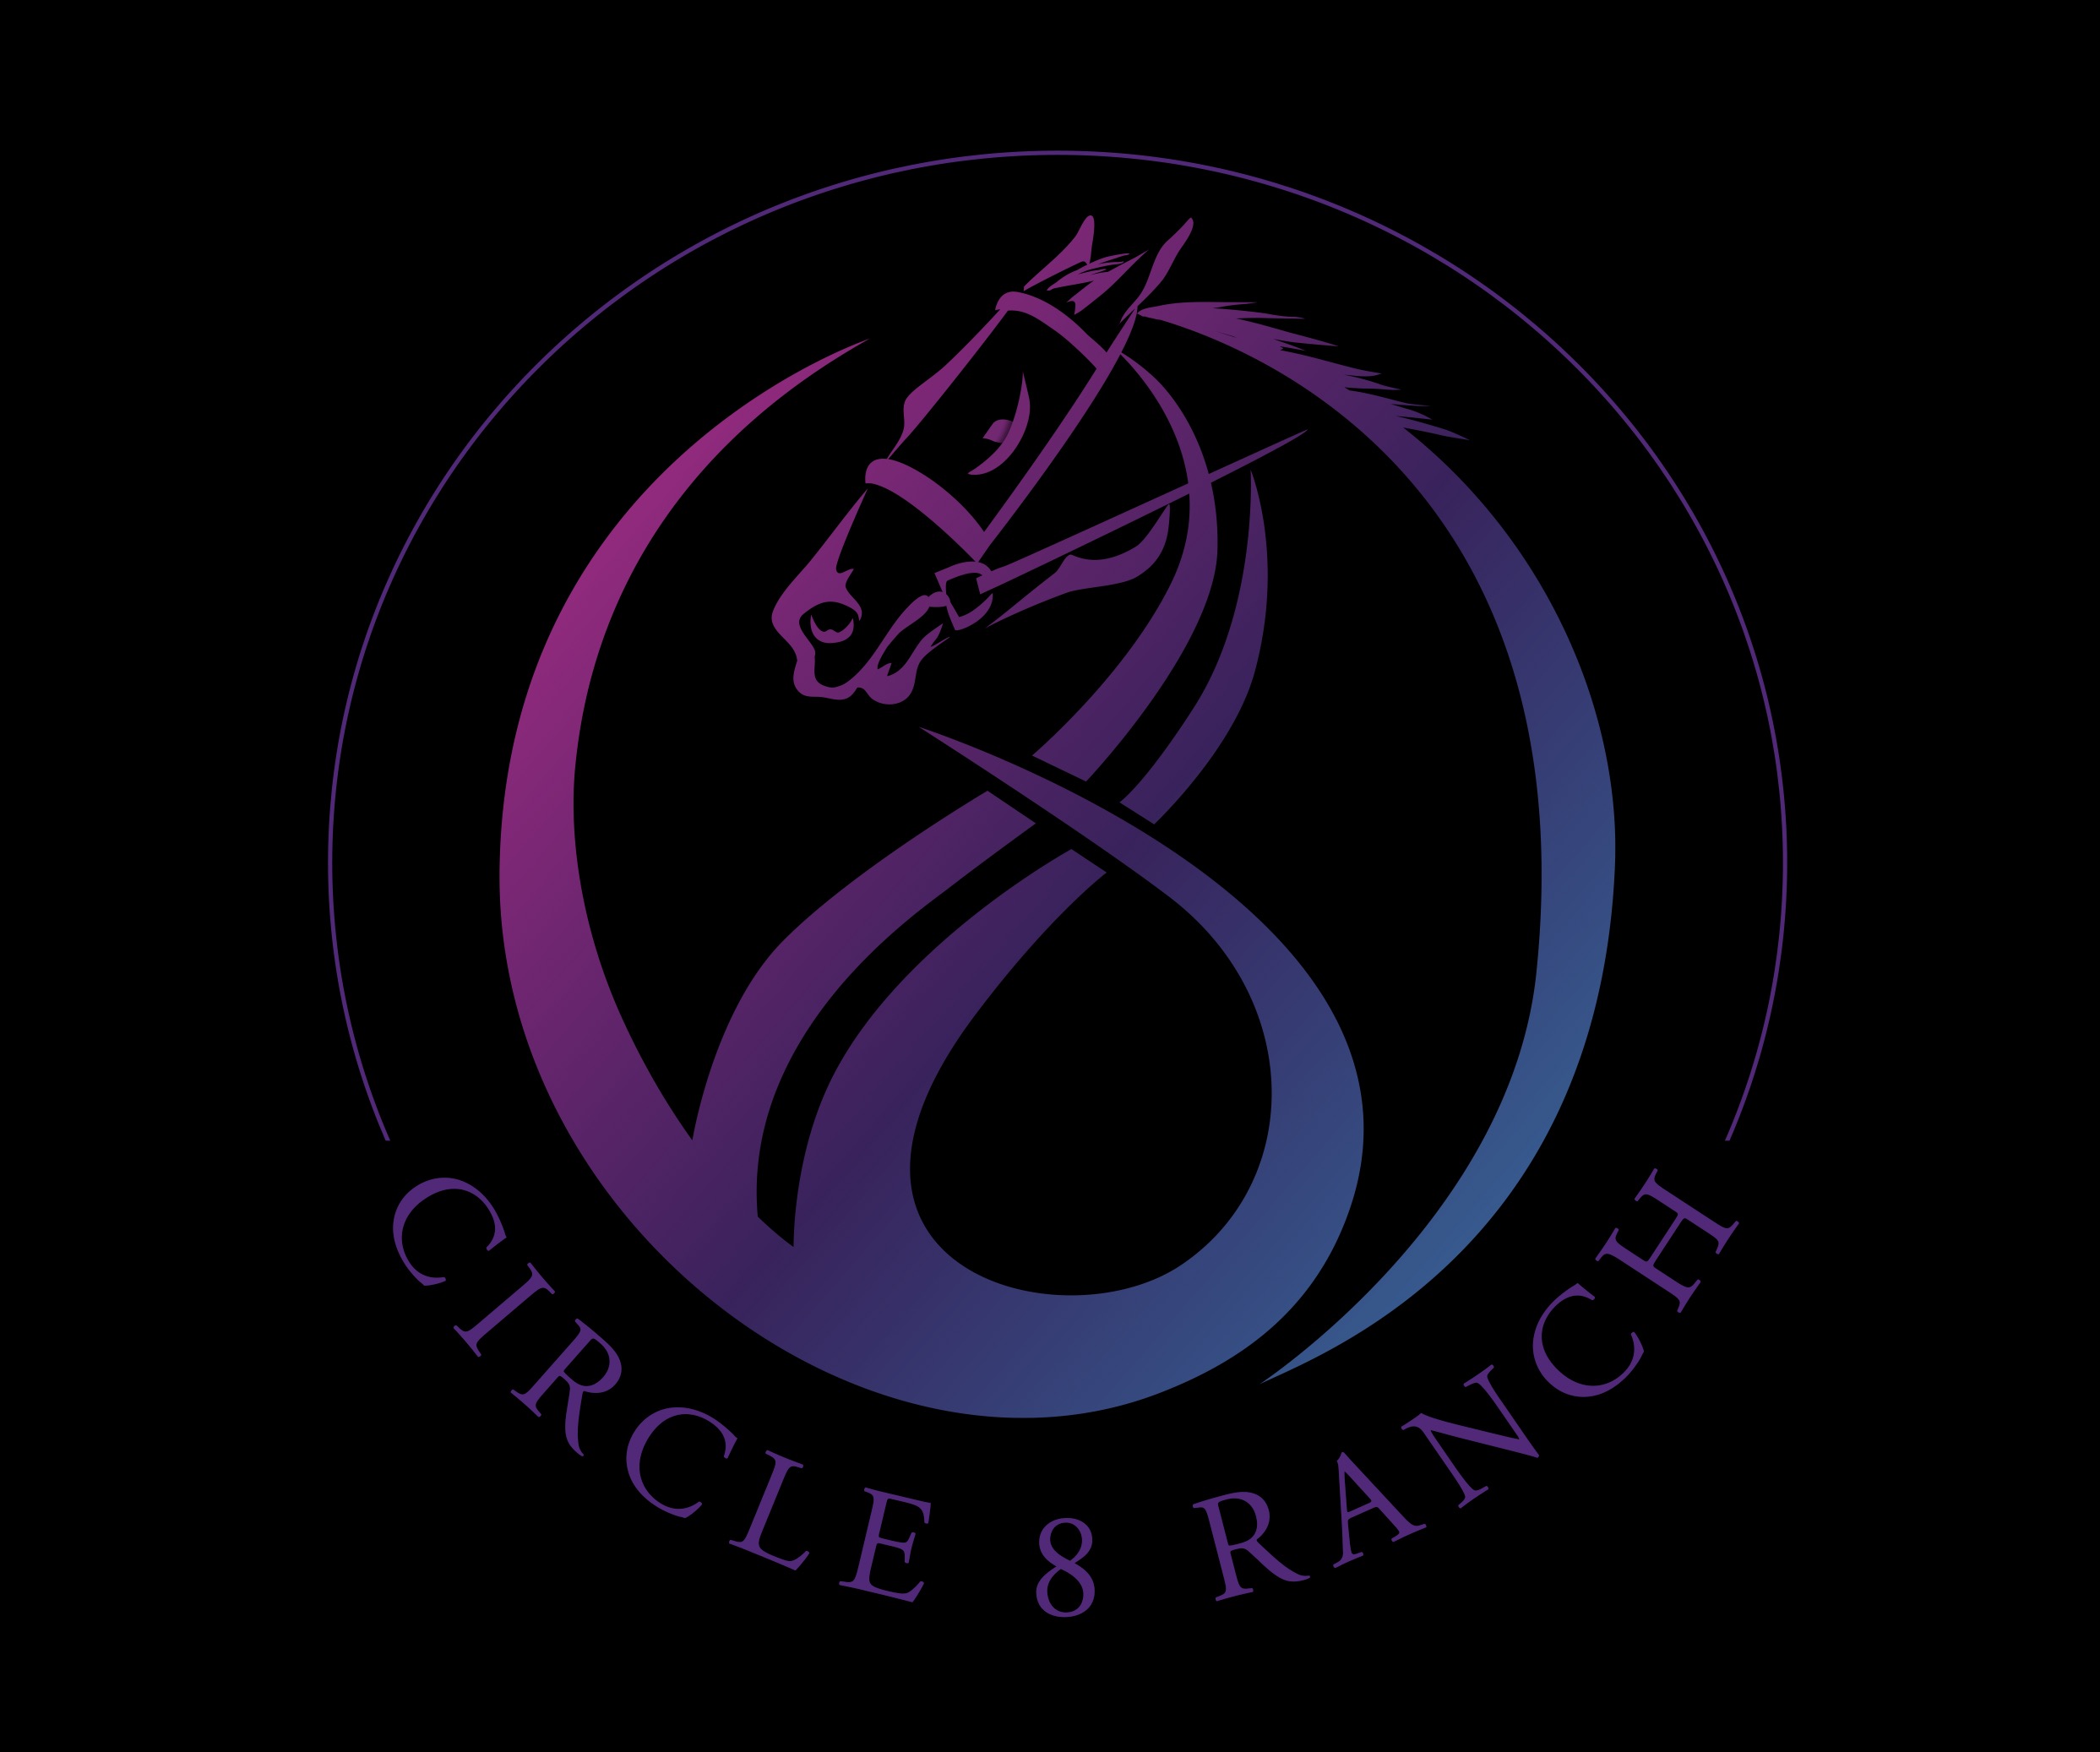 Circle 8